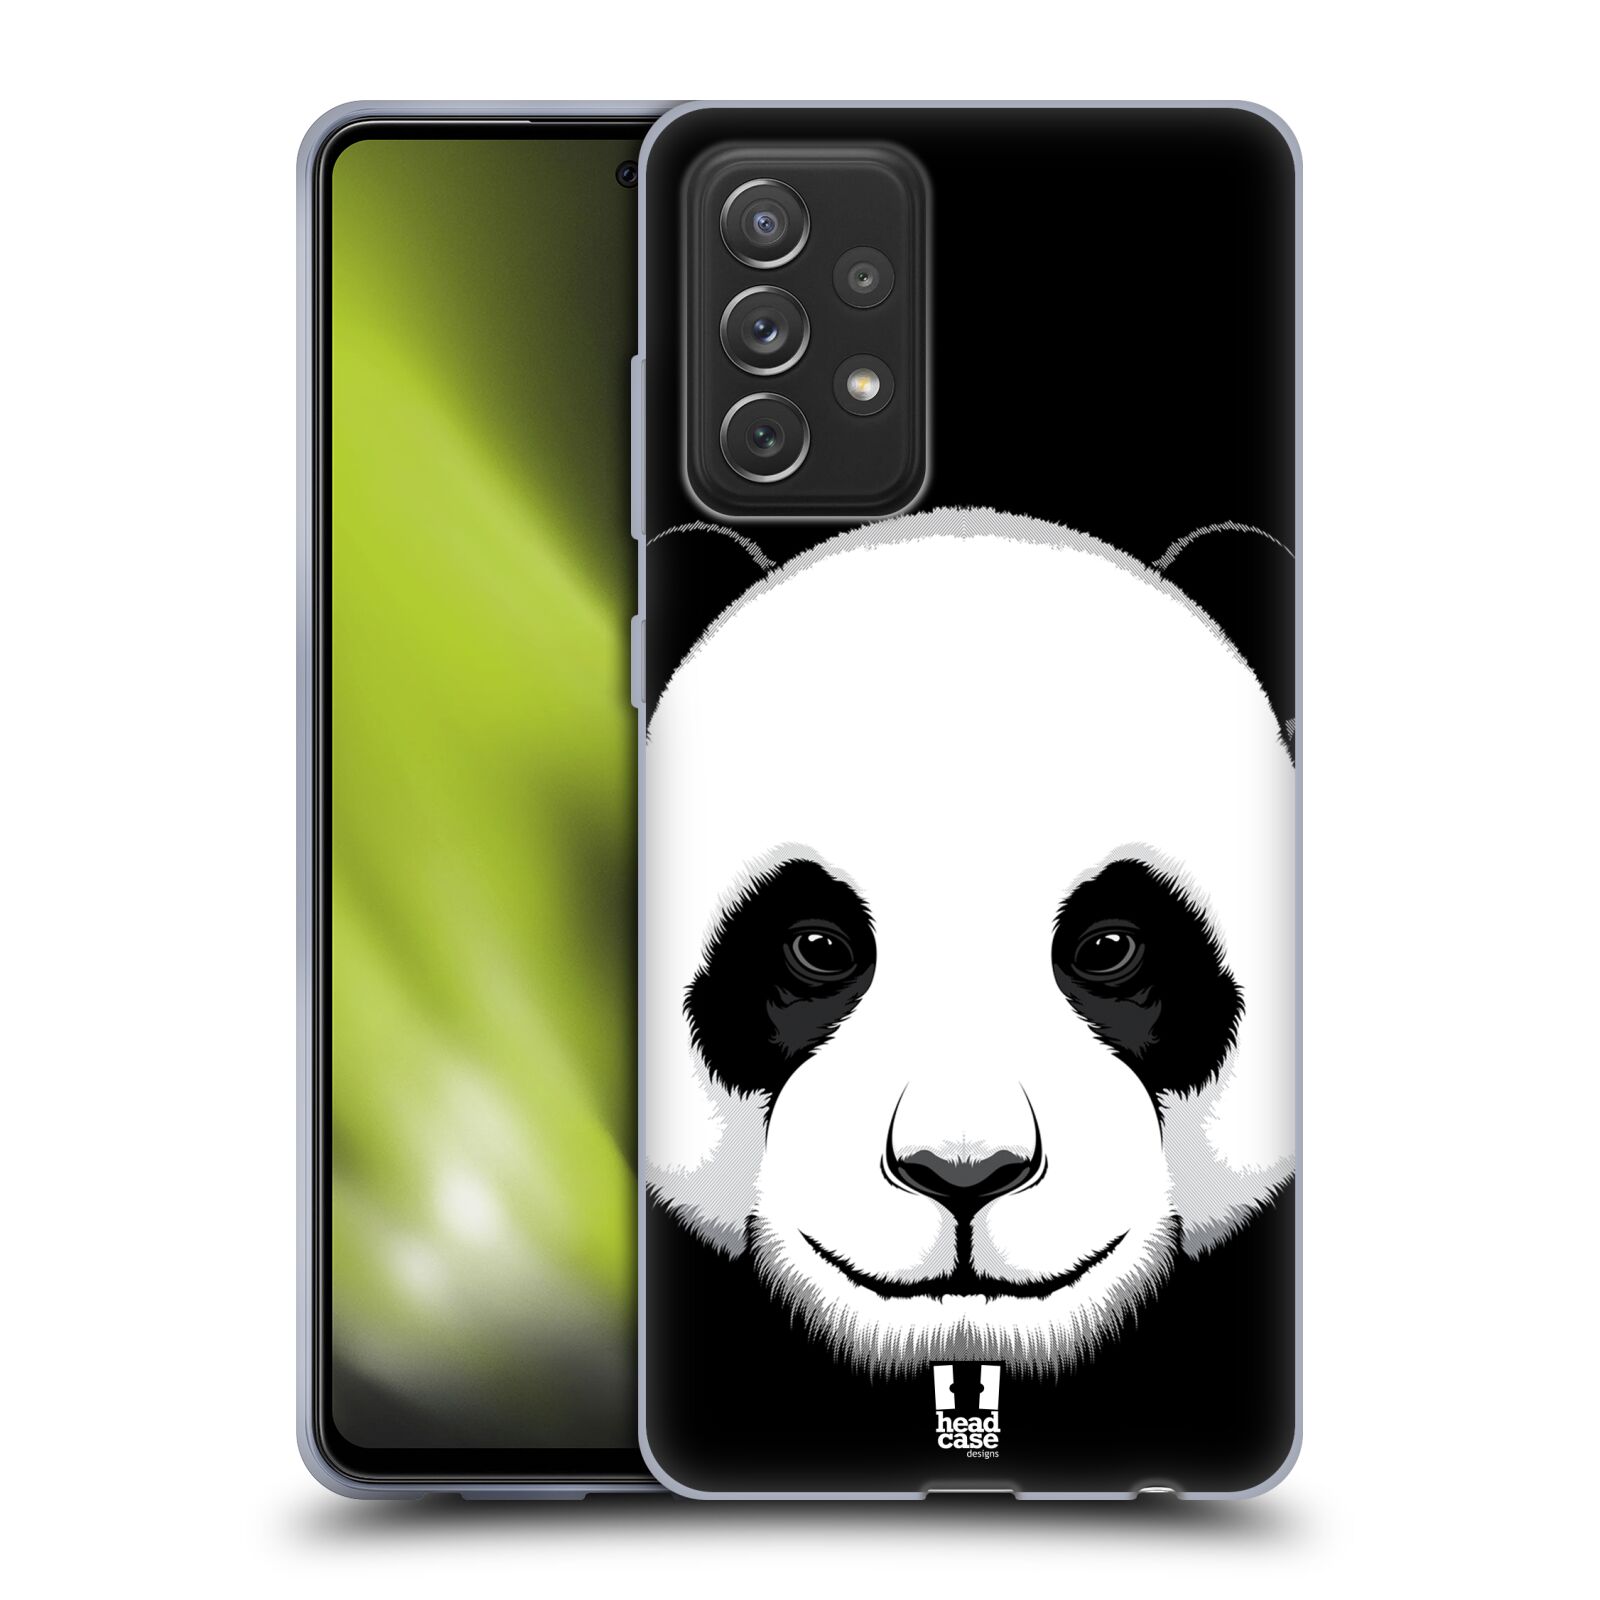 Plastový obal HEAD CASE na mobil Samsung Galaxy A72 / A72 5G vzor Zvíře kreslená tvář panda